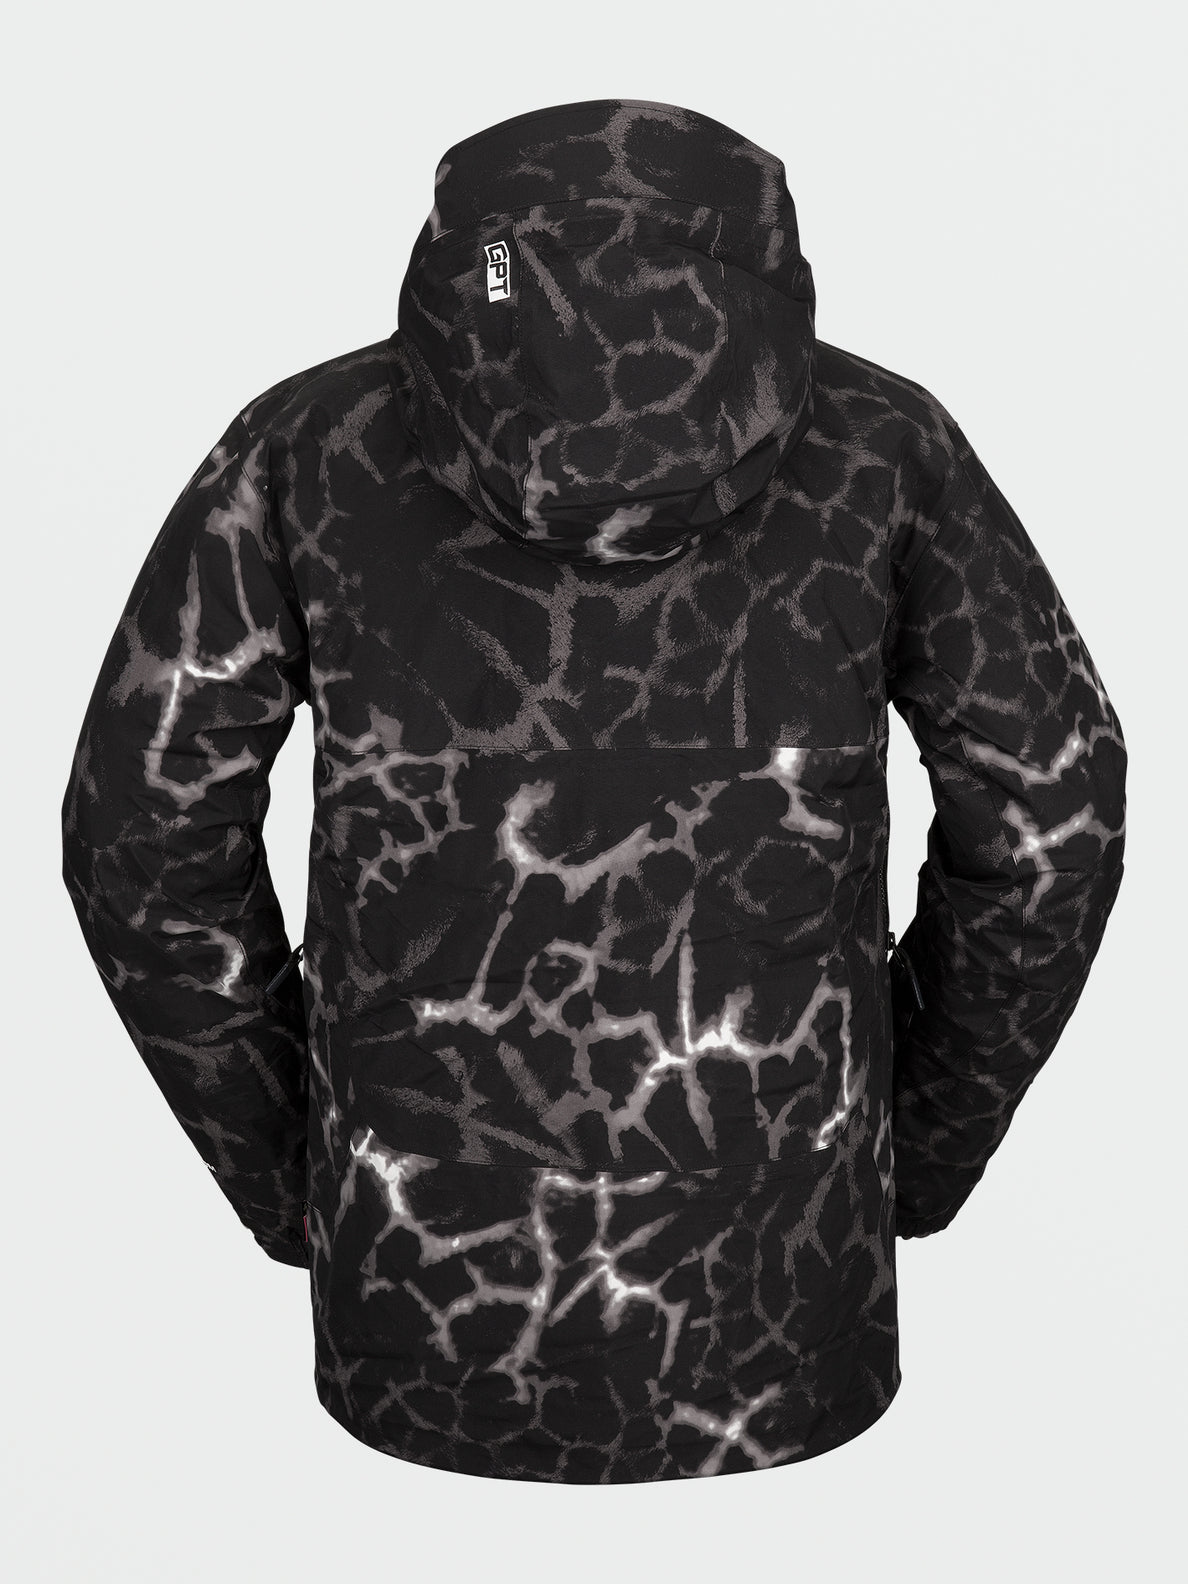 Mens Tds Infrared Gore-Tex Jacket - Black Giraffe